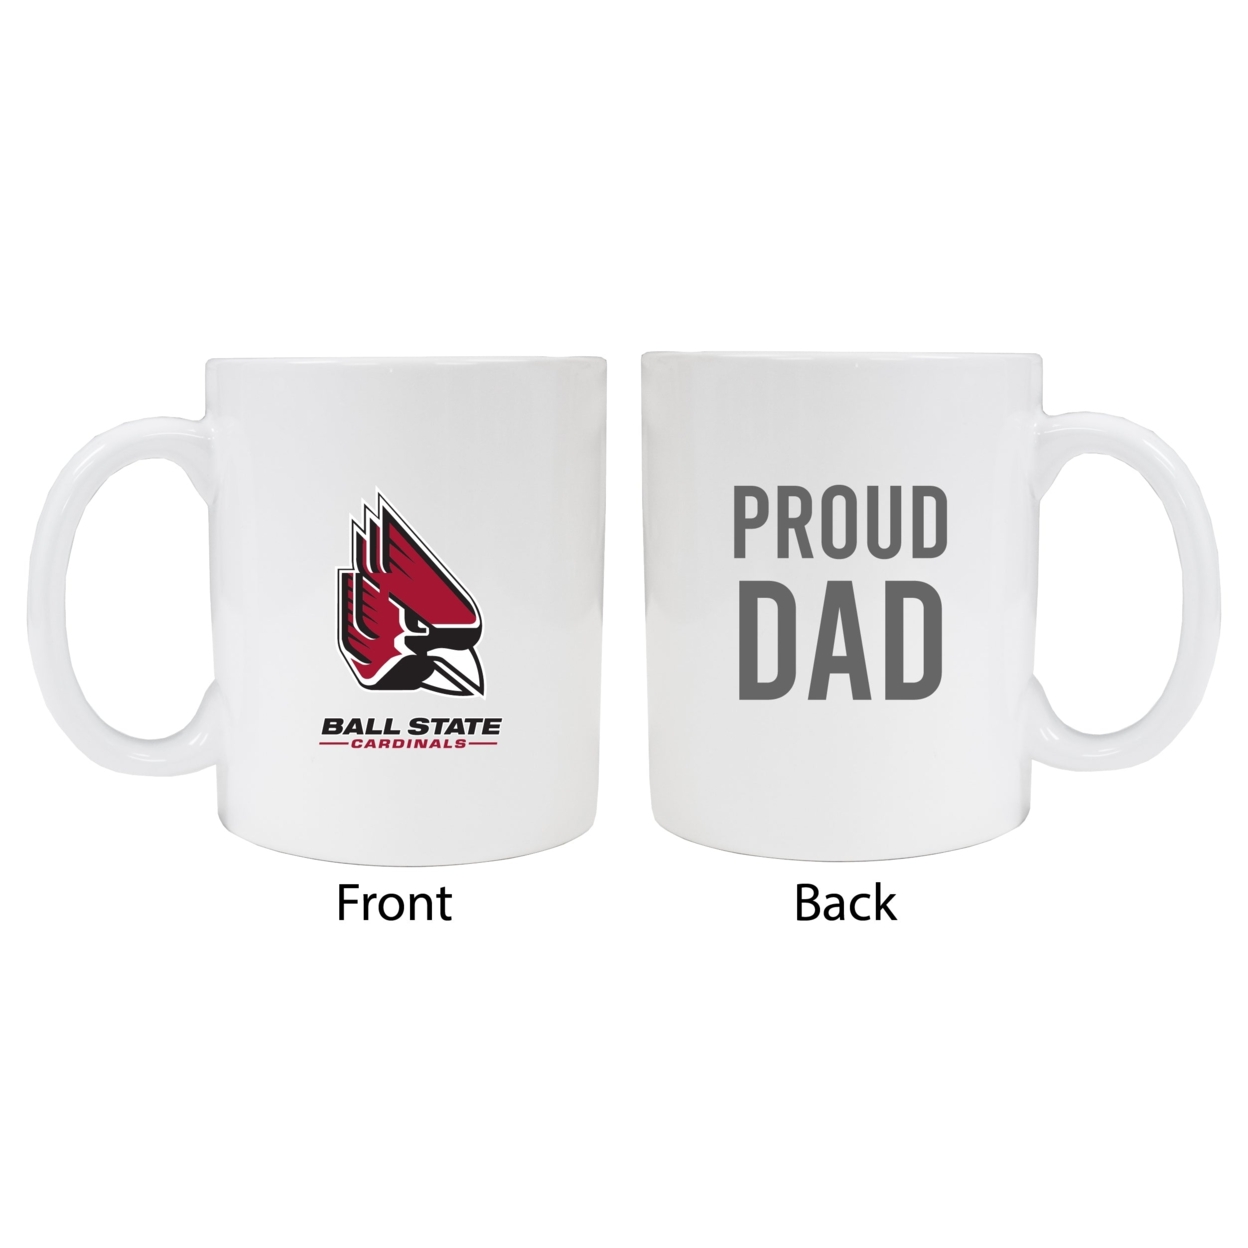 Ball State University Proud Dad Ceramic Coffee Mug - White (2 Pack)